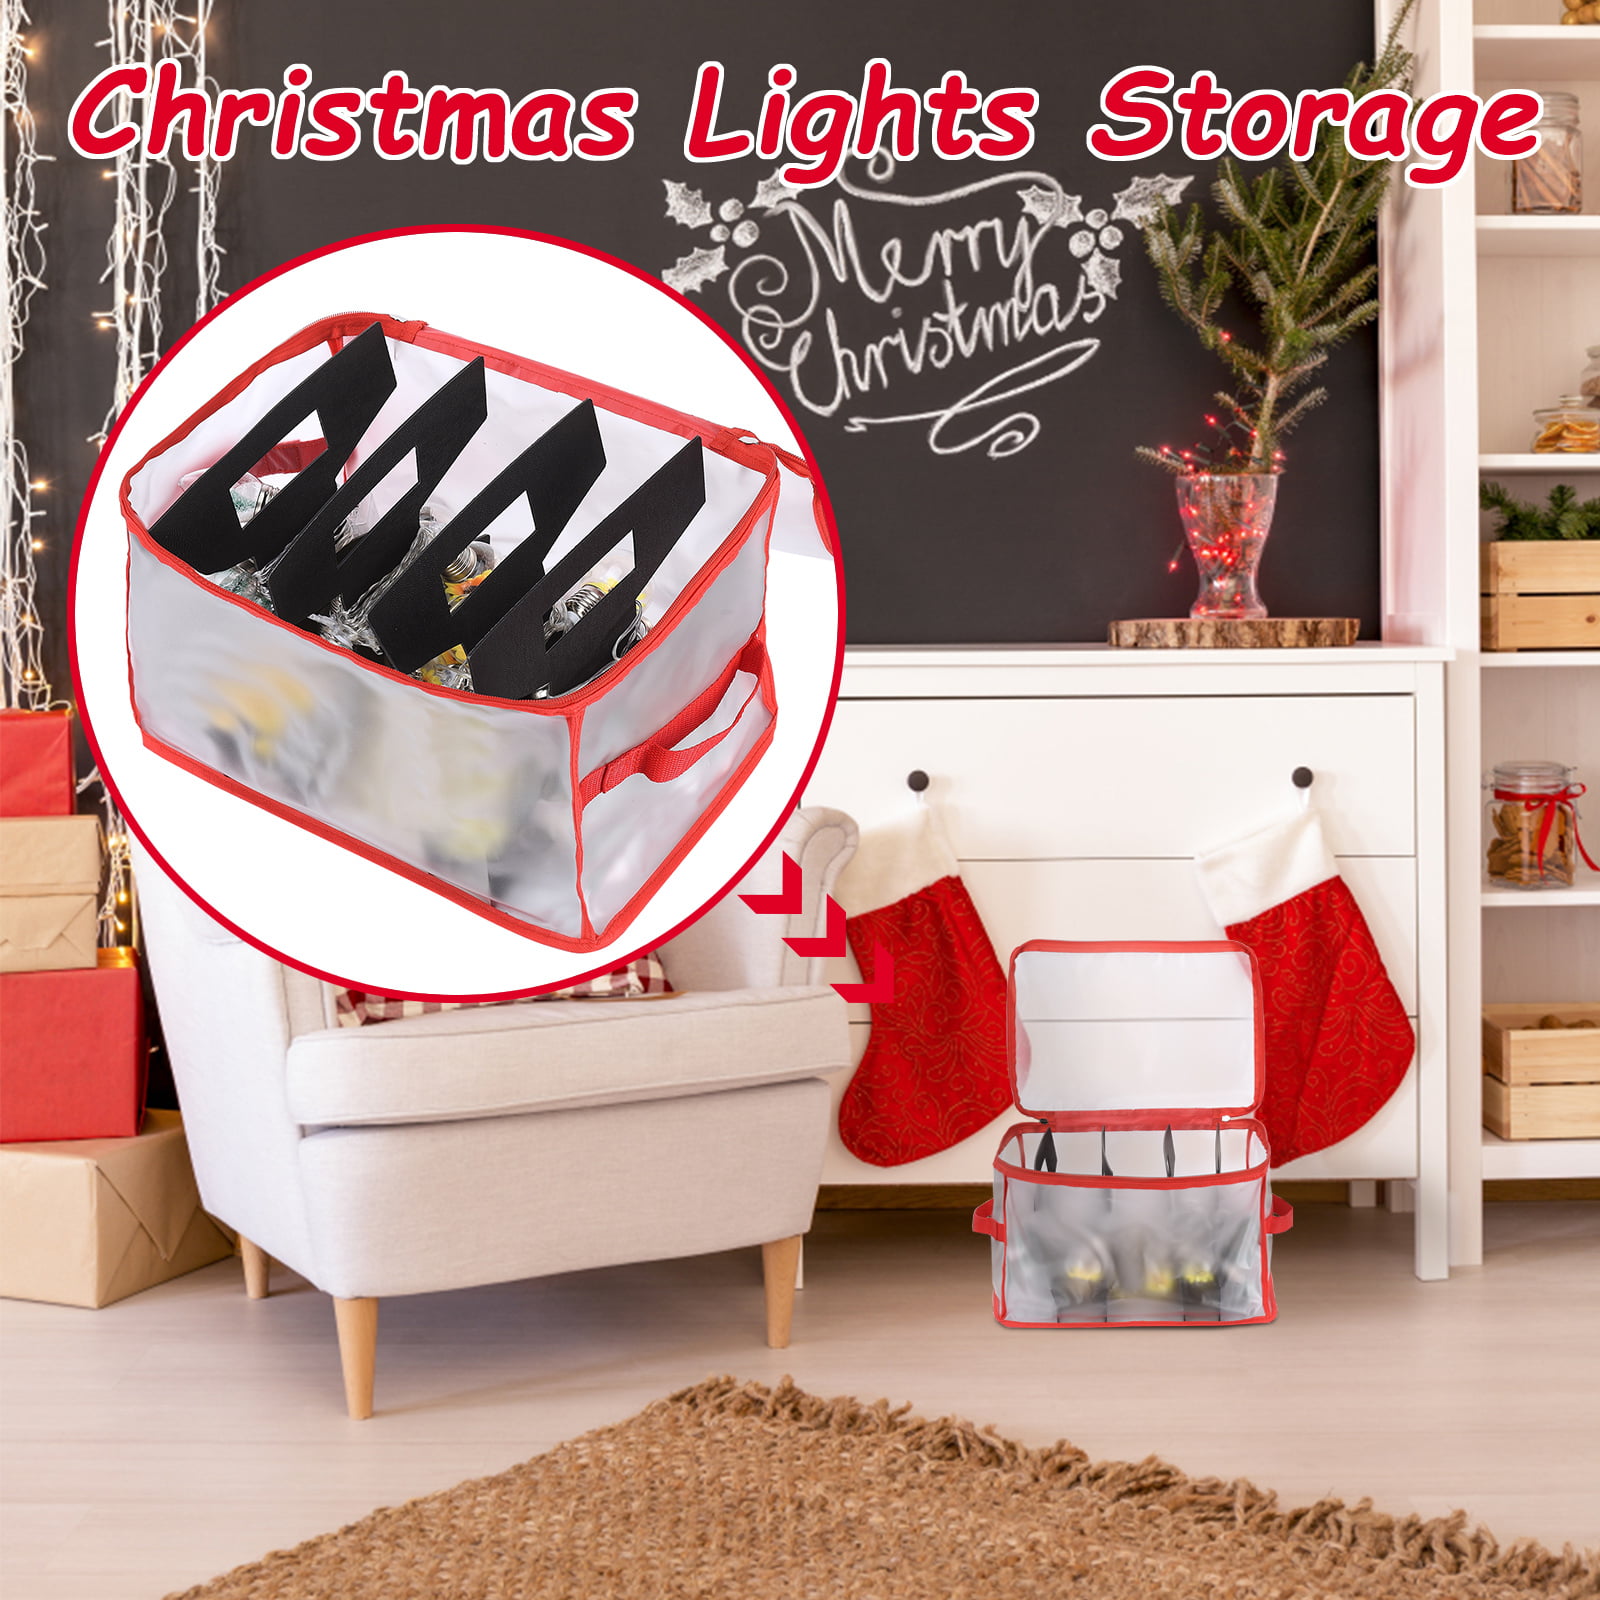 Christmas Light Storage Reels and Organizer - Bed Bath & Beyond - 32167956